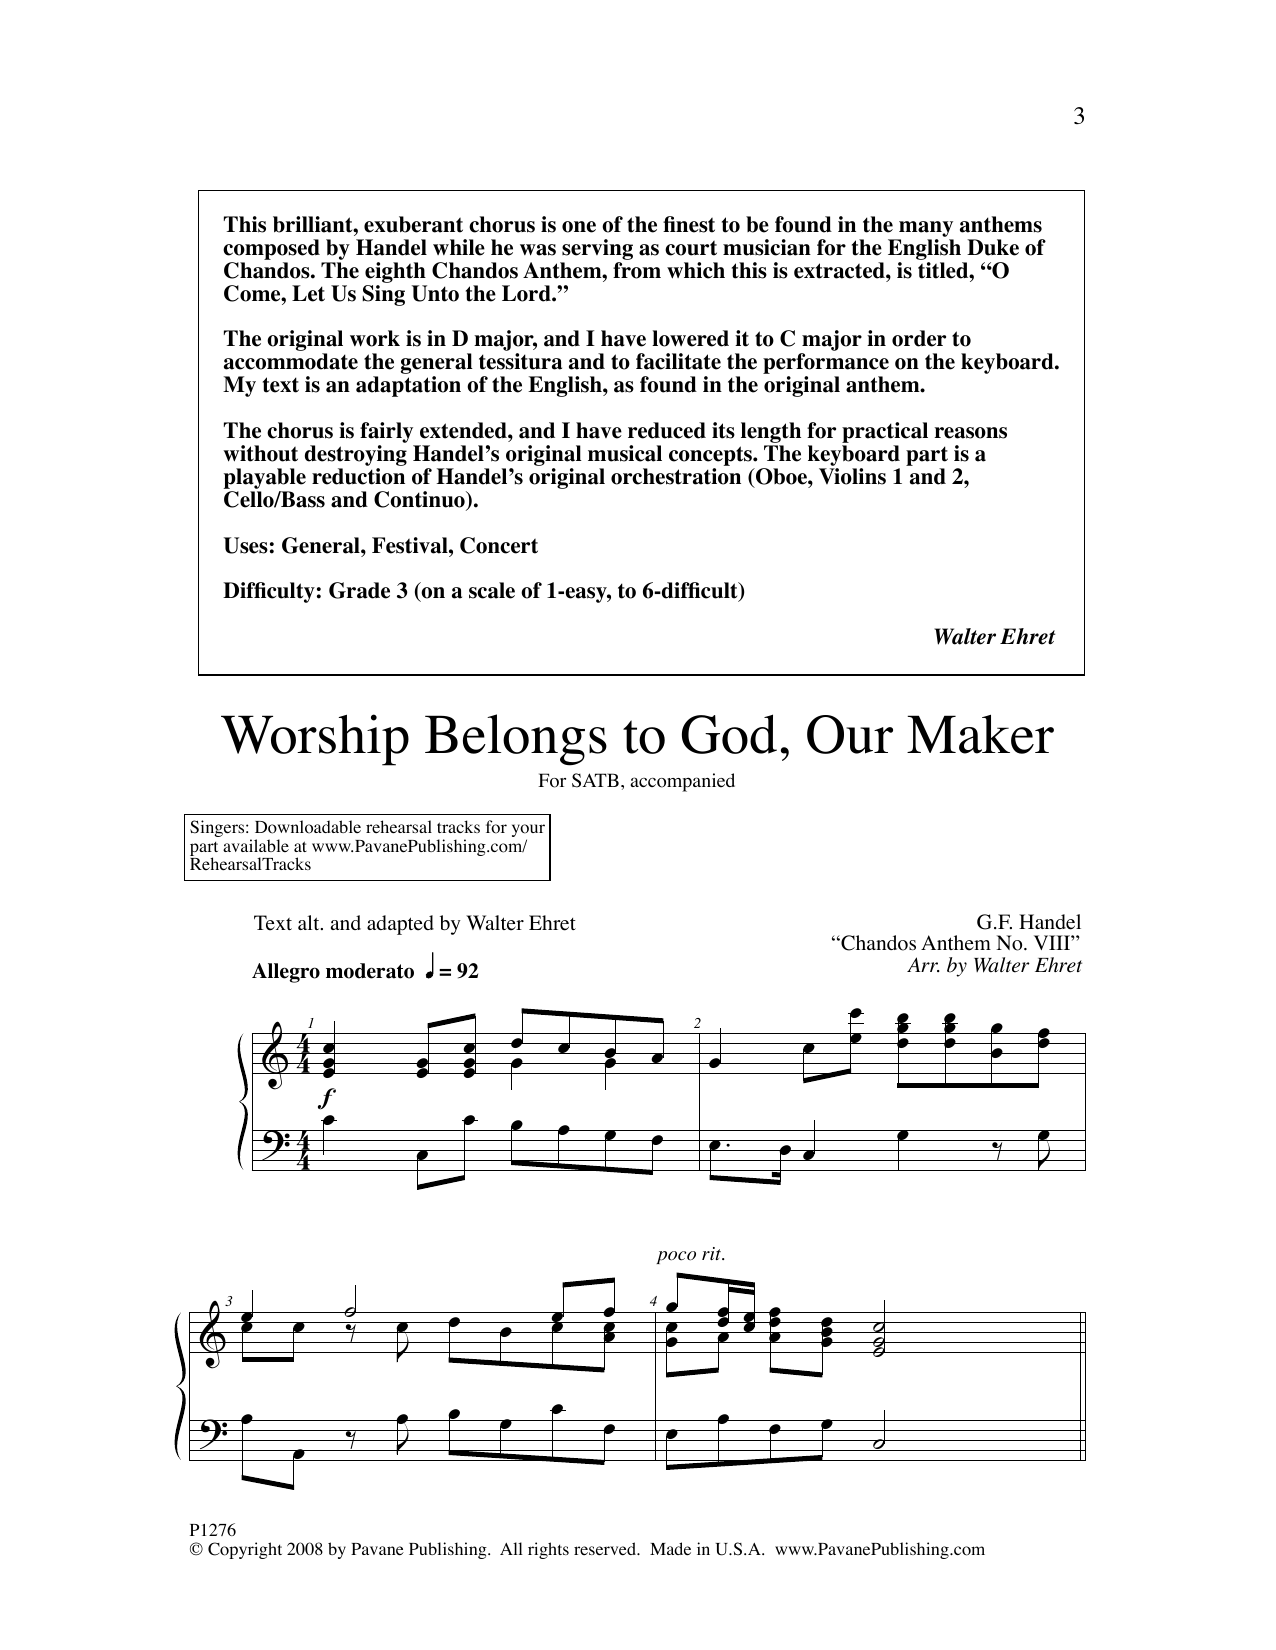 George Friedrich Handel Worship Belongs to God, Our Maker (arr. Walter Ehret) Sheet Music Notes & Chords for SATB Choir - Download or Print PDF